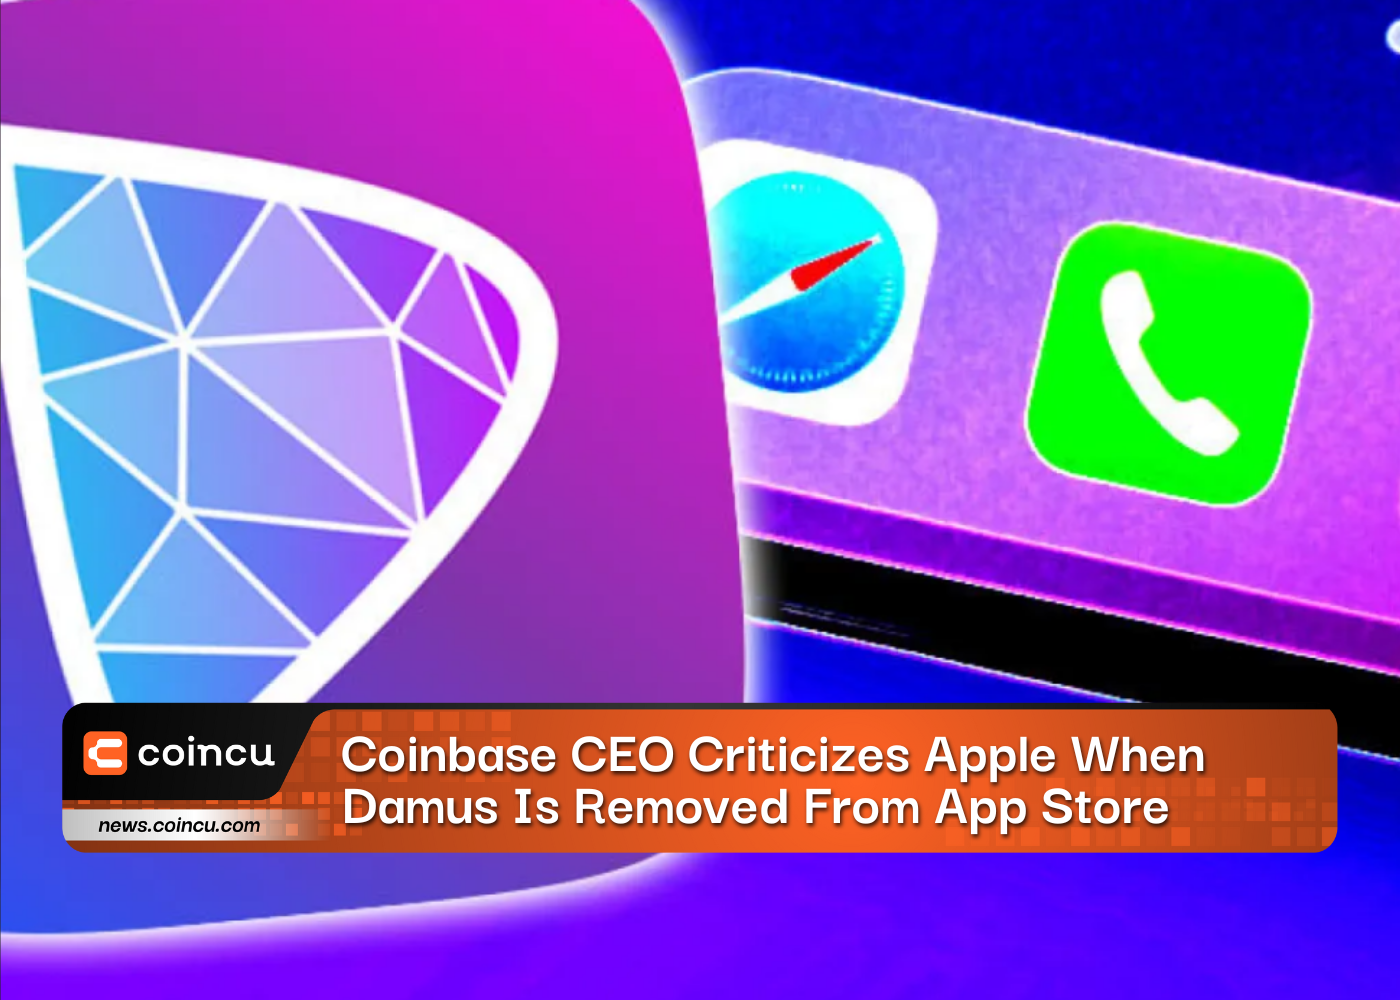 Coinbase CEO, Damus가 App Store에서 제거되었을 때 Apple 비판